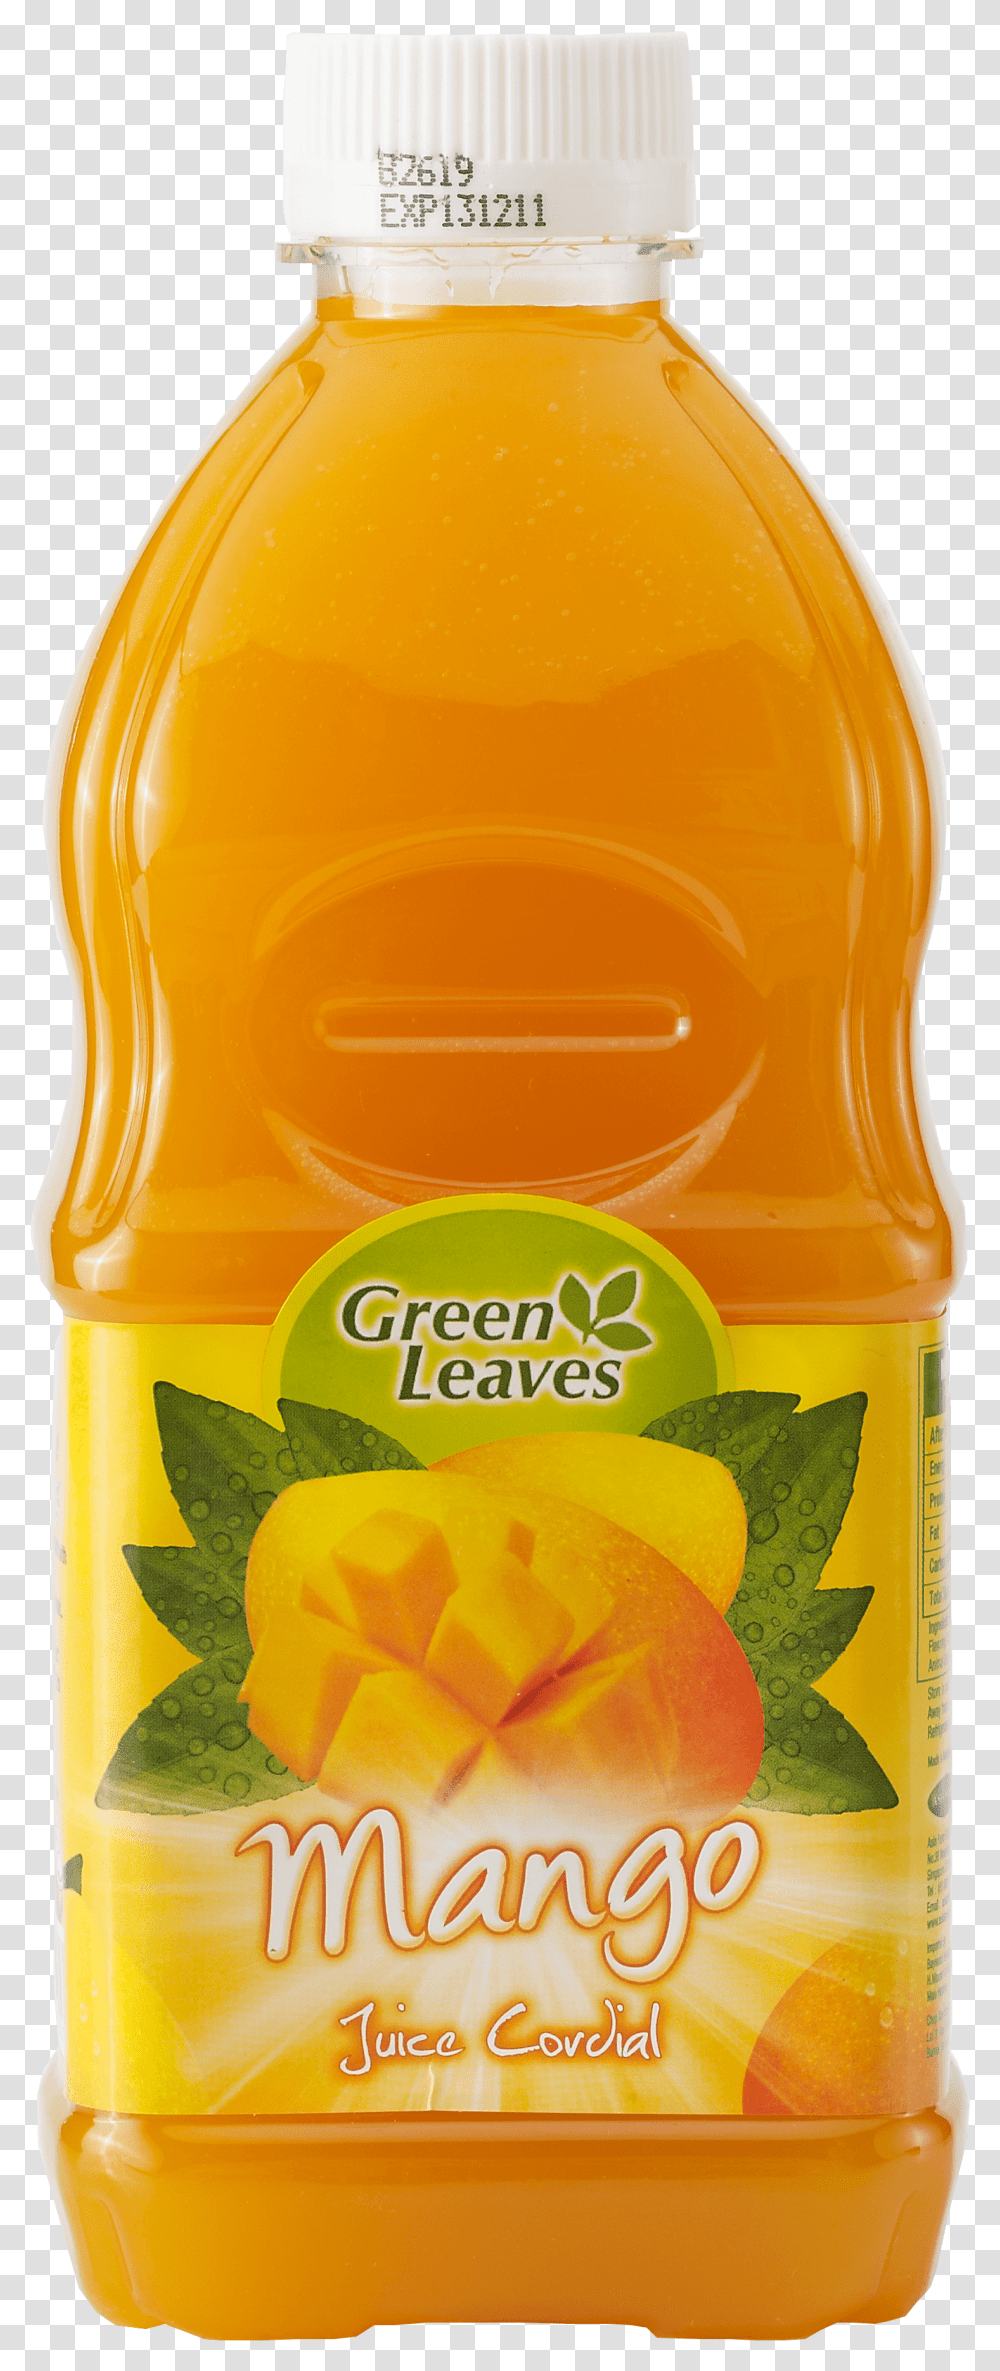 Mango Juice Mango Juice Bottle, Beverage, Drink, Orange Juice Transparent Png